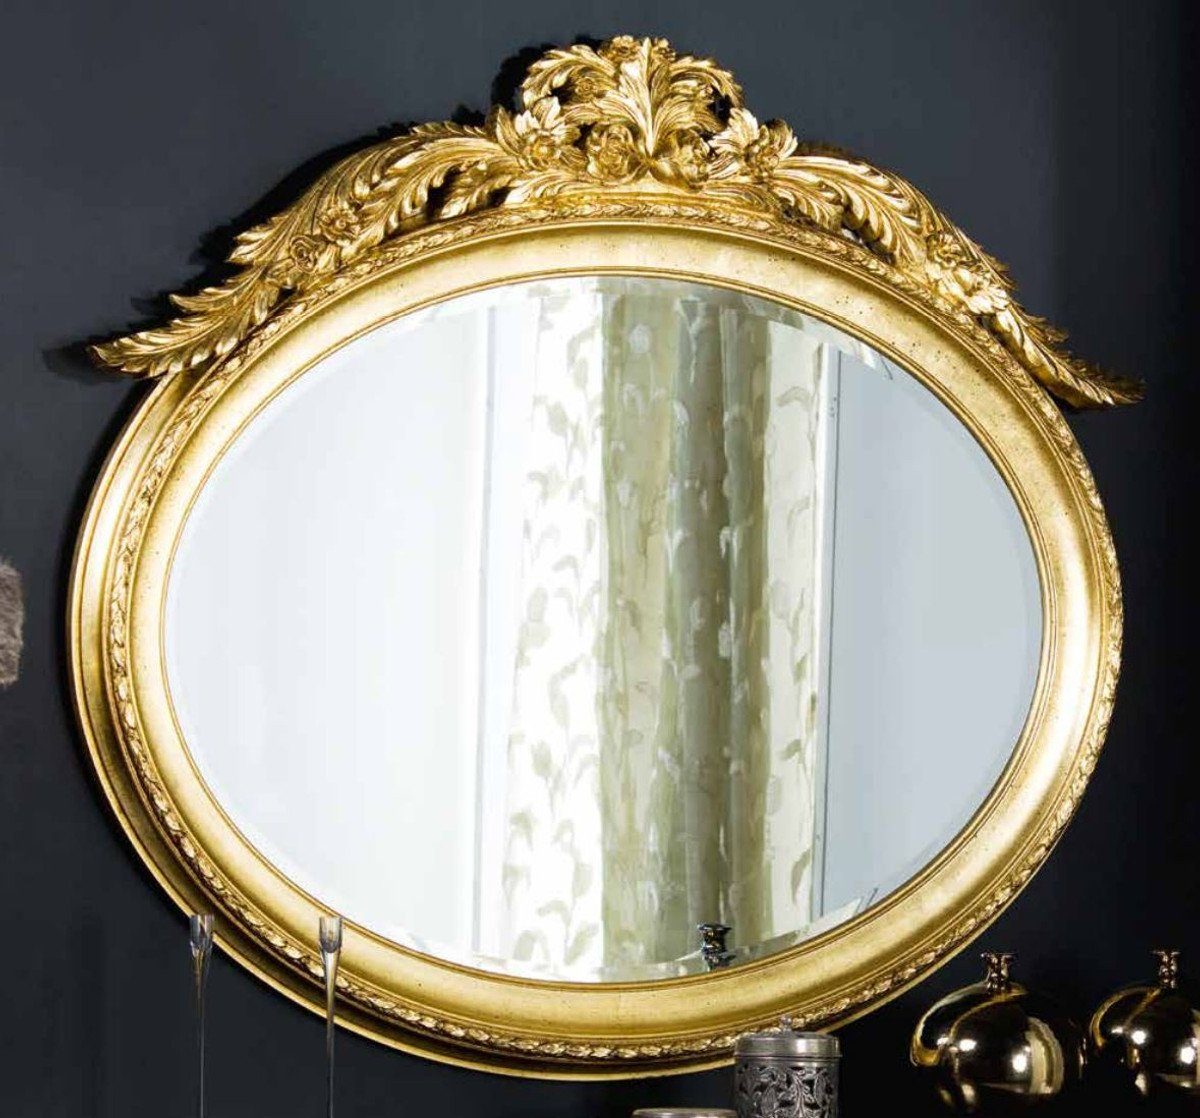 Casa Padrino Barockspiegel Luxus Barock Spiegel Gold - Ovaler Wandspiegel im Barockstil - Barock Möbel - Luxus Qualität - Made in Italy